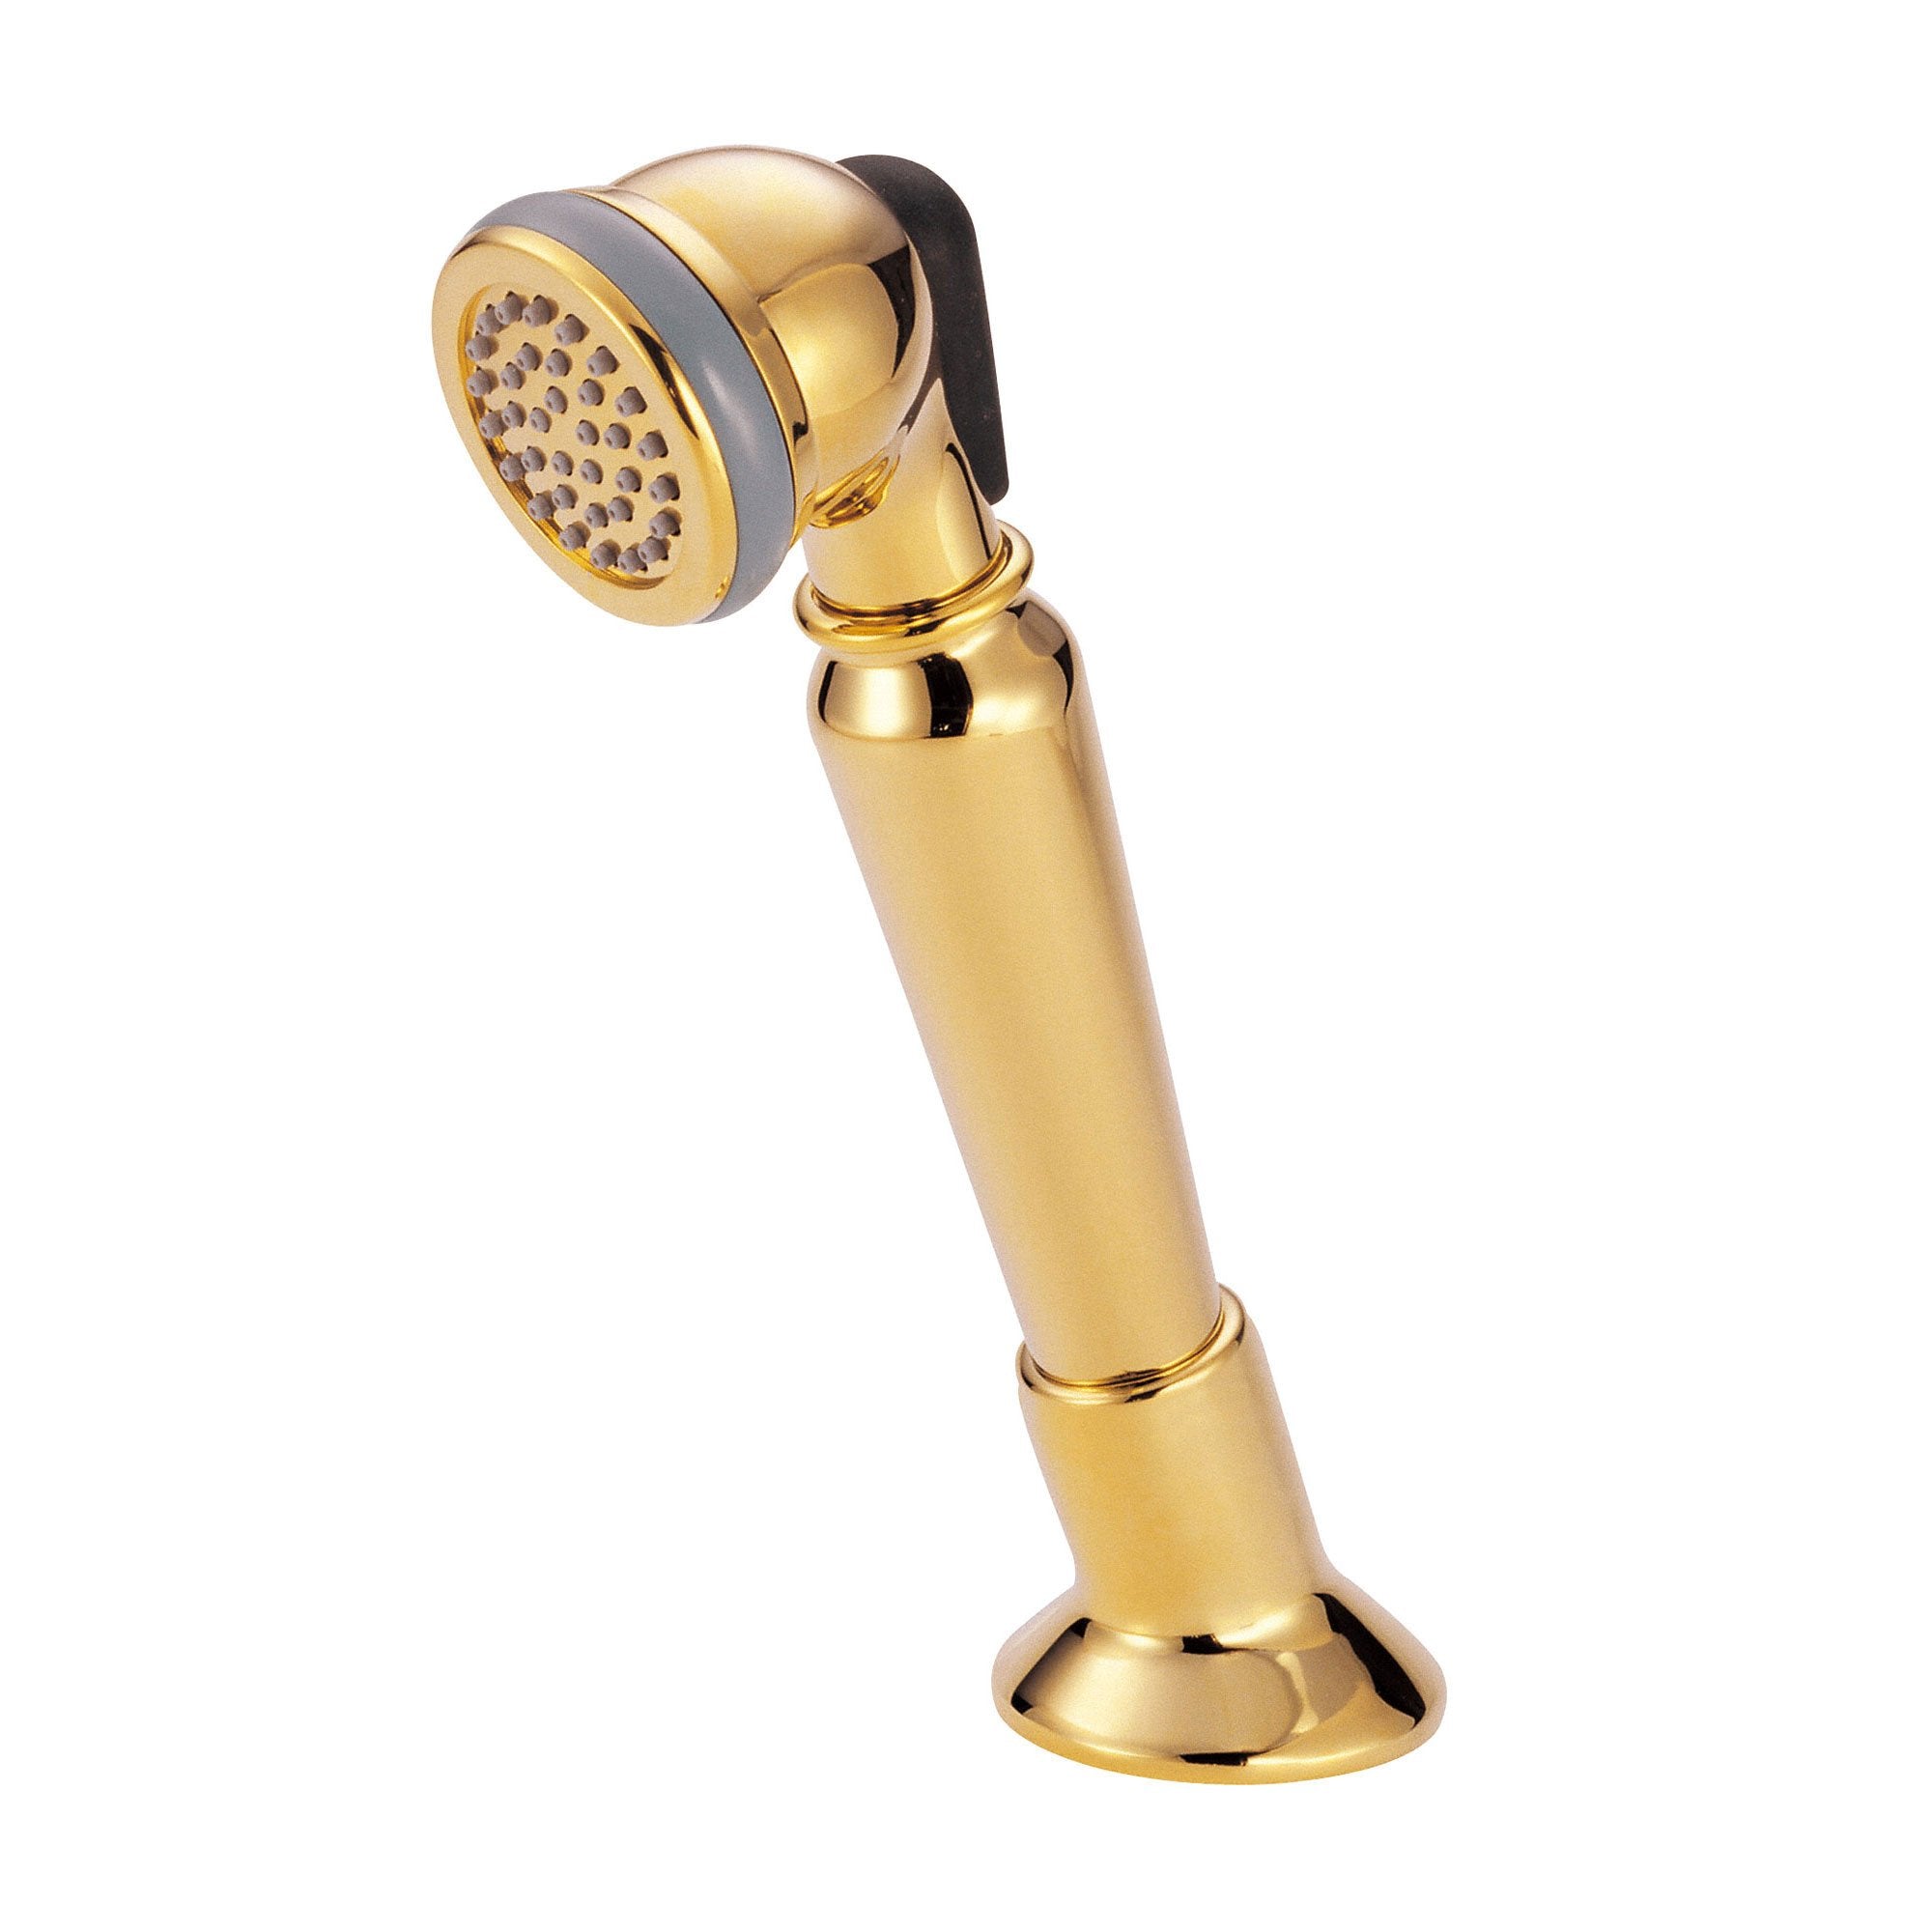 Danze Traditional Polished Brass Roman Tub Filler Handheld Shower Add-on Kit